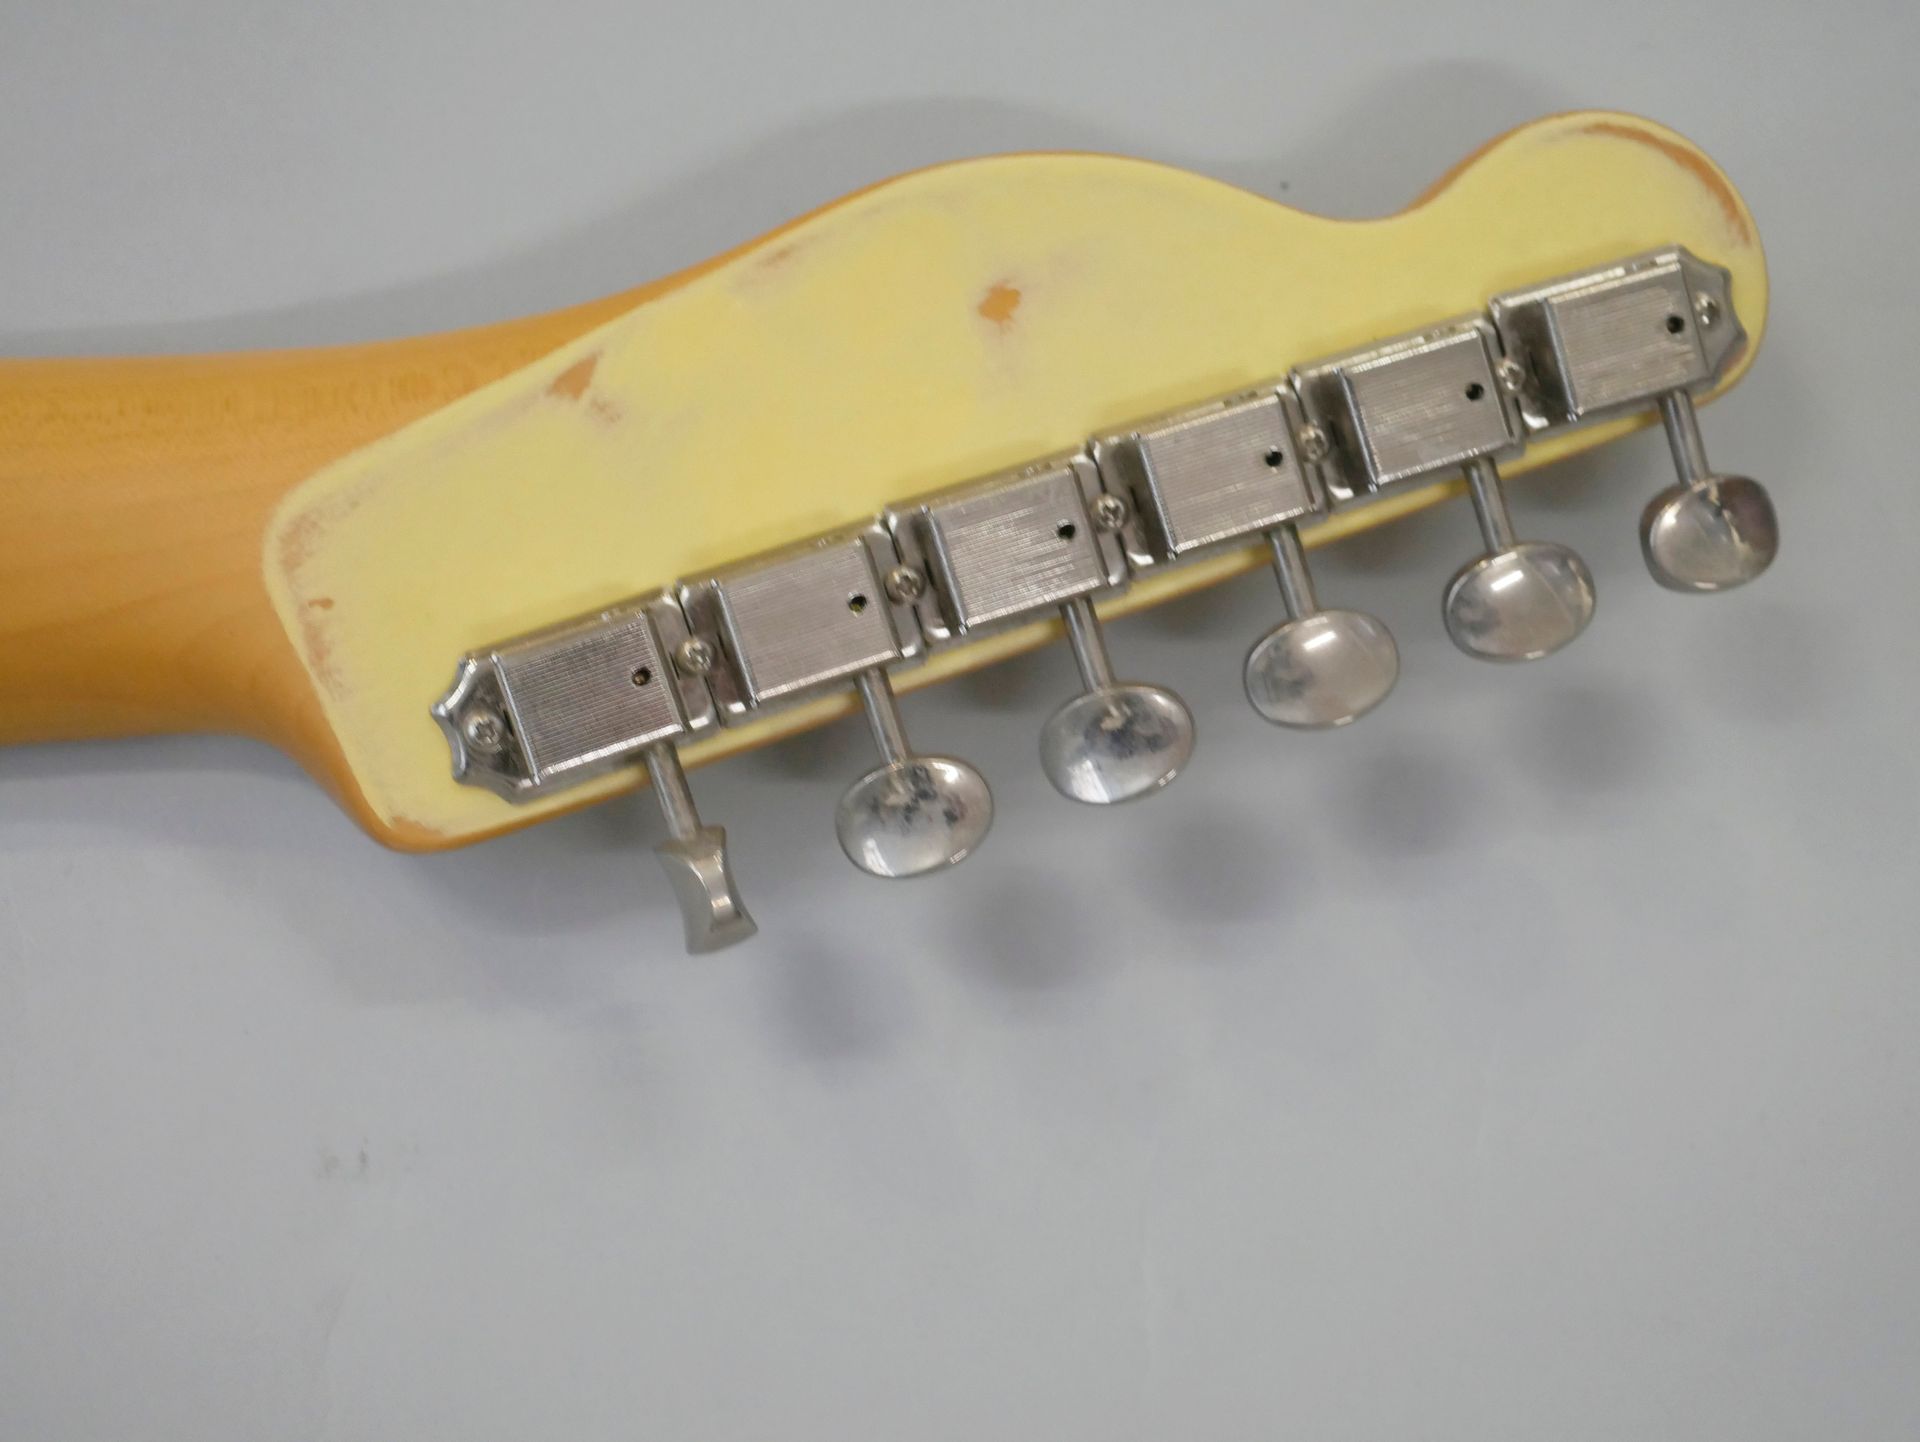 Null Guitare électrique Solidbody anonyme modèle Telecaster finition Blonde. 

B&hellip;